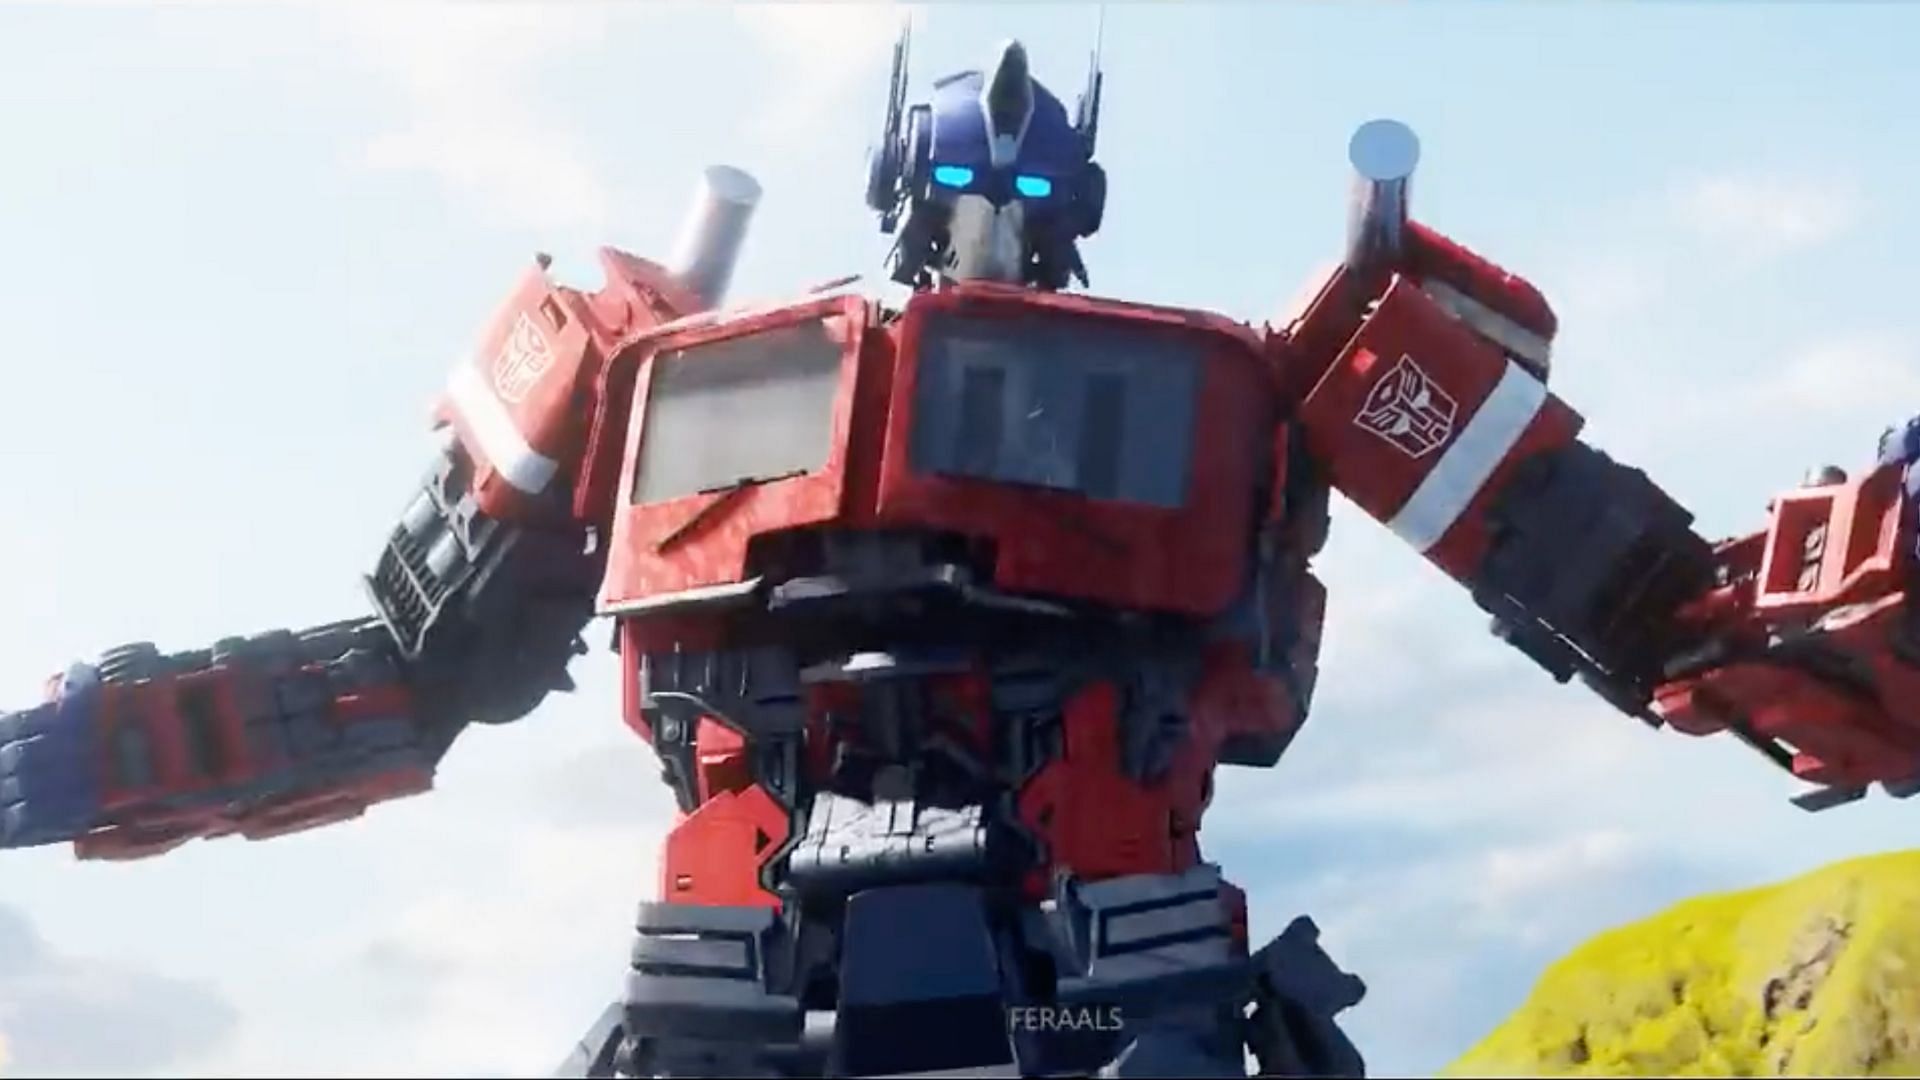 Optimus Prime in Fortnite (Image via watchhedd on Twitter)